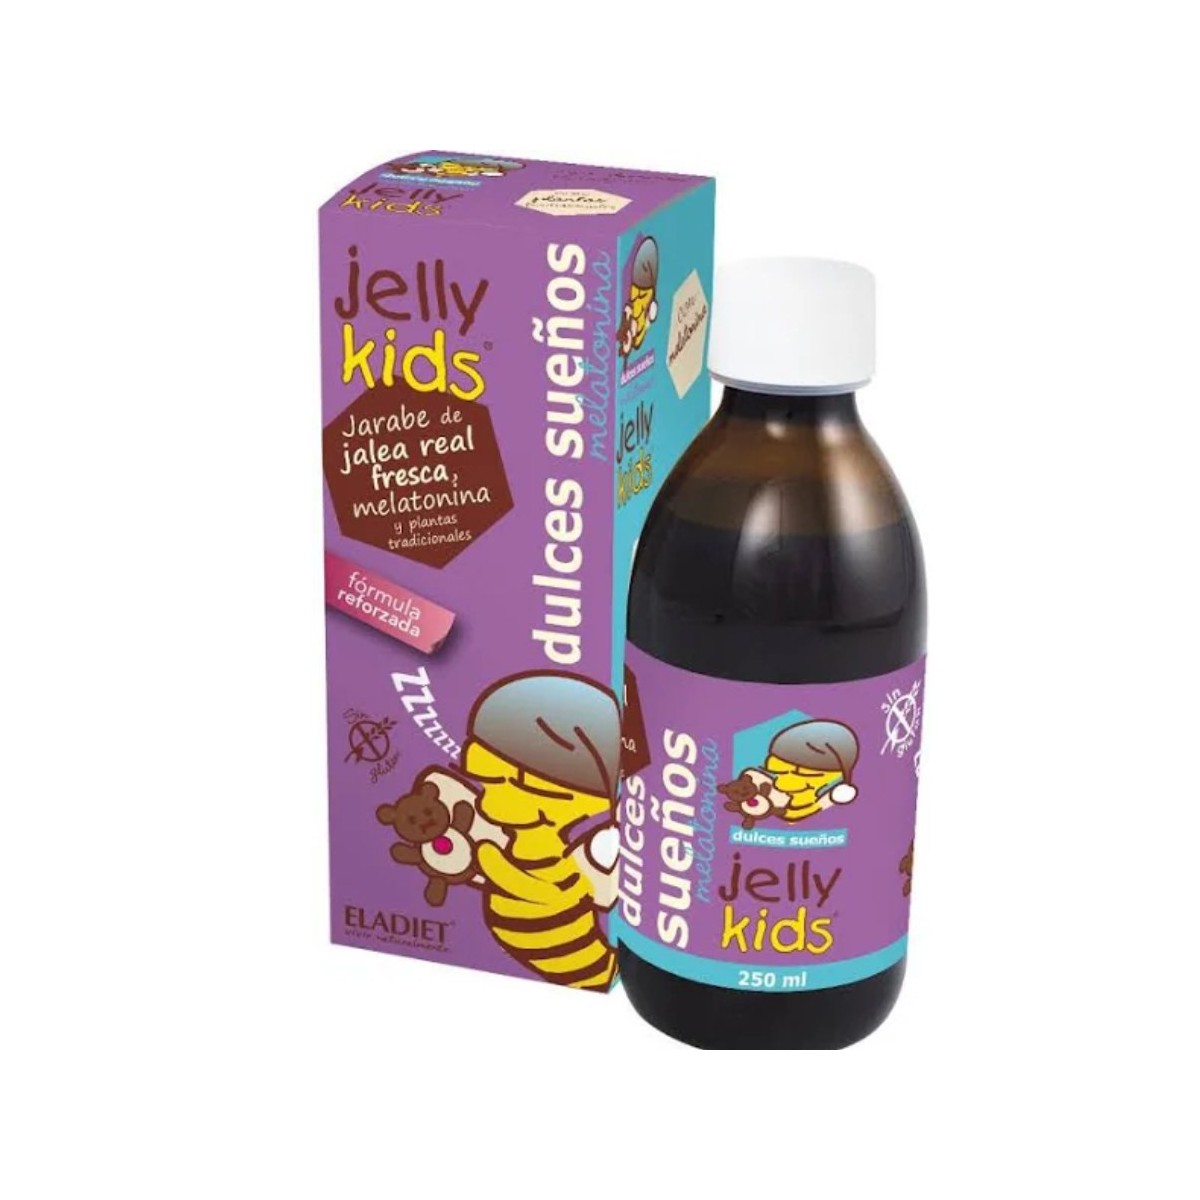 Eladiet Jelly Kids Dulces Sueños 250 ml